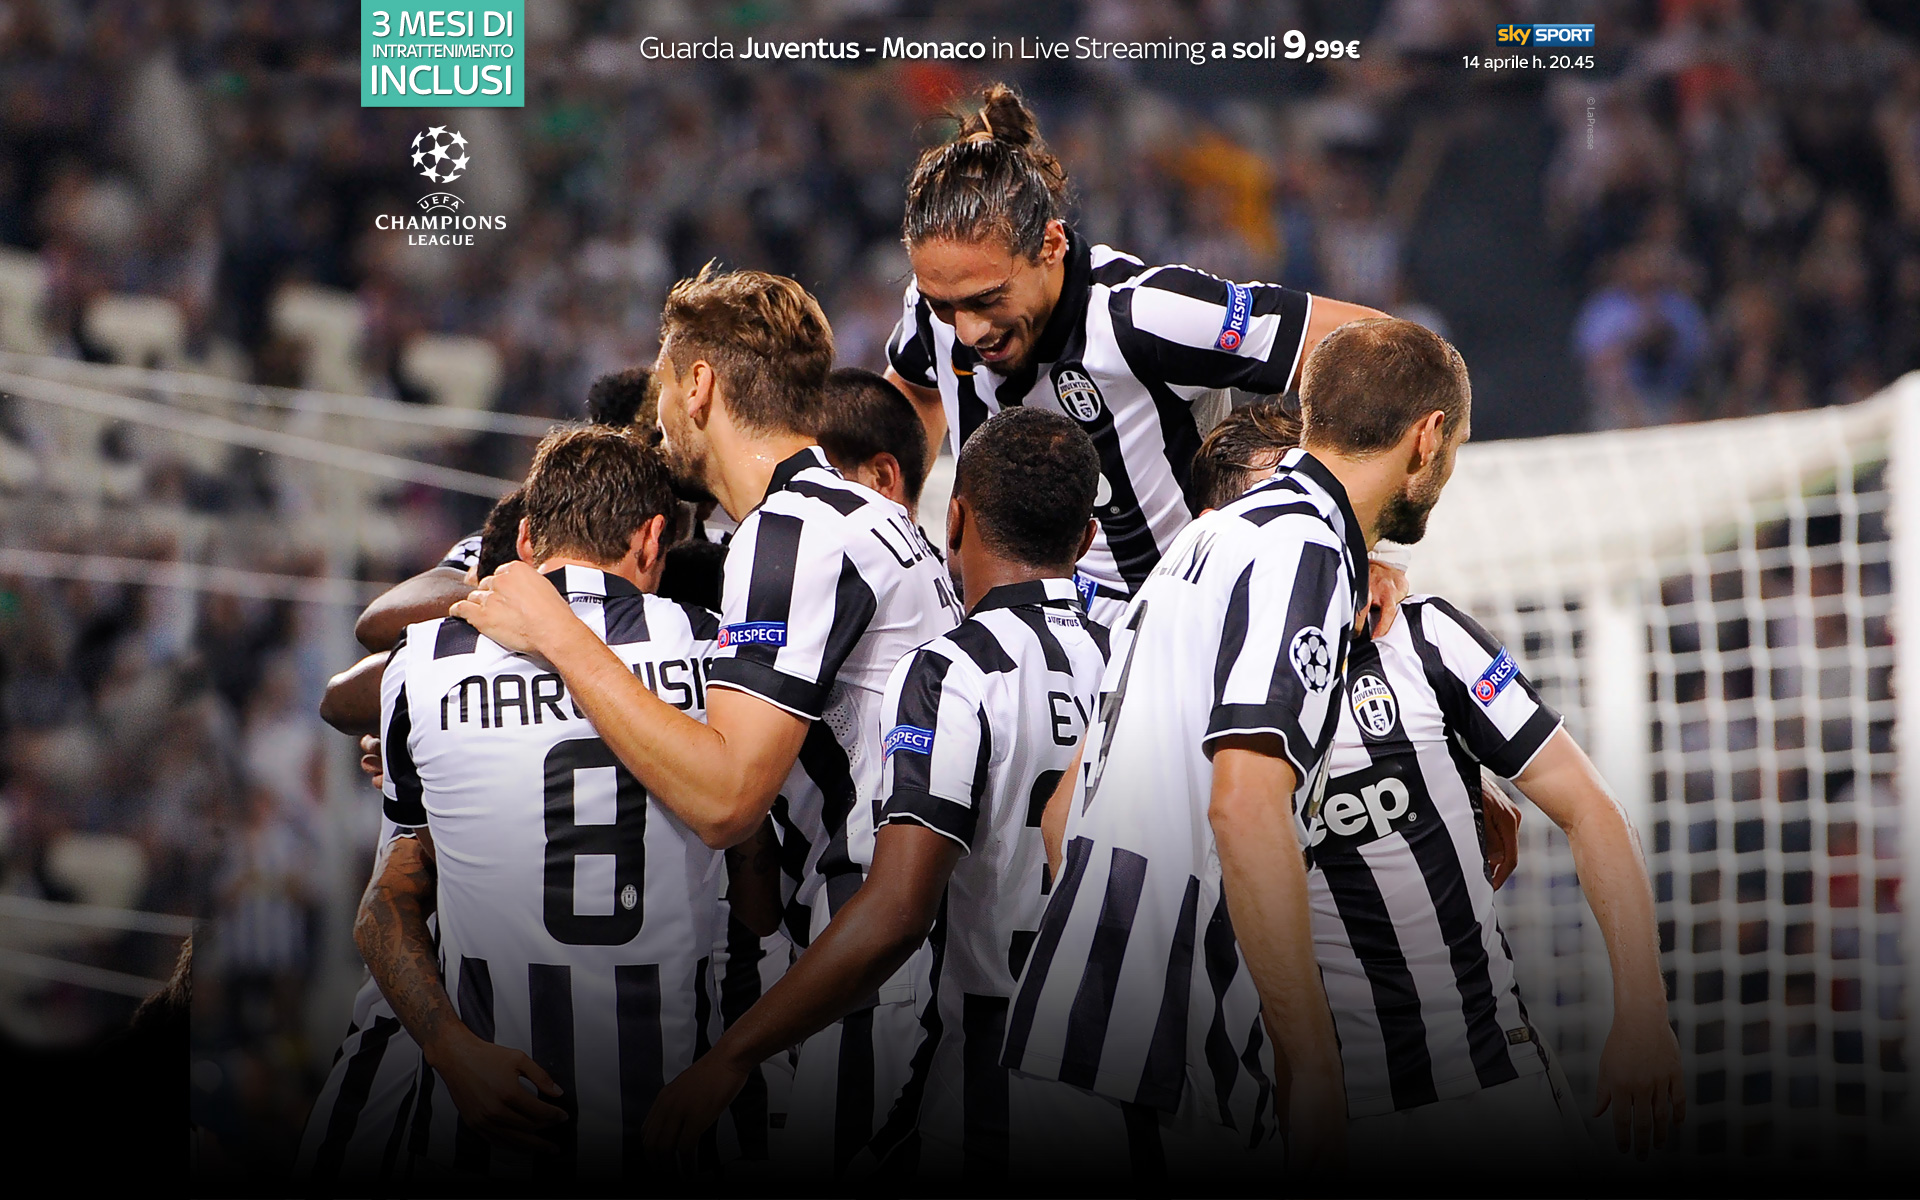 Juventus - Monaco + 3 mesi di Serie Tv su Sky Online a 9,99 euro